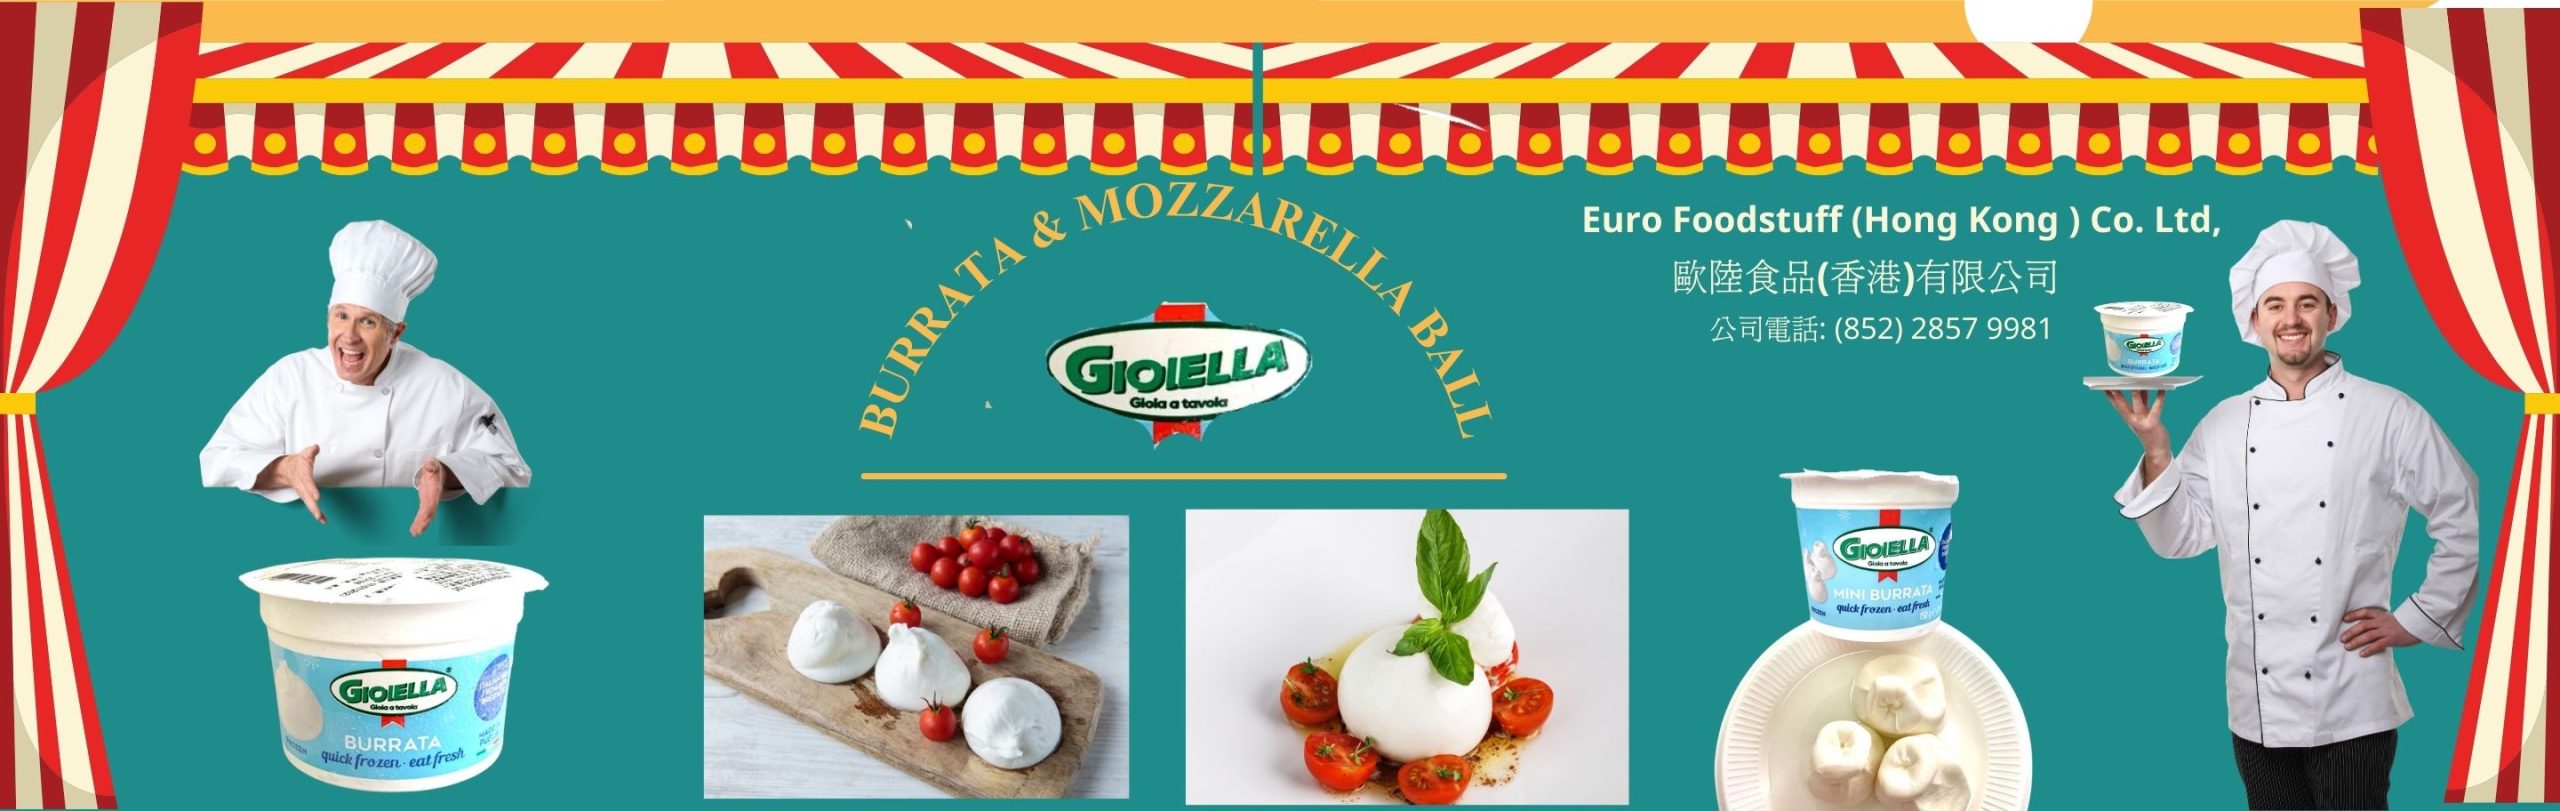 Burrata & Mozzarella Ball